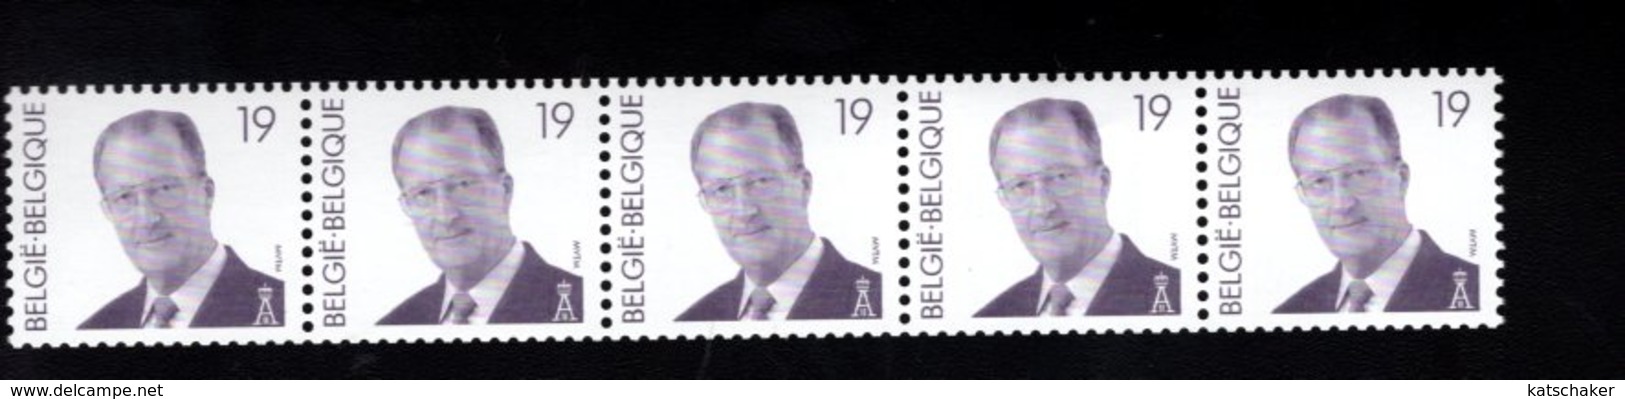 701147491 BELGIE POSTFRIS MINT NEVER HINGED POSTFRISCH EINWANDFREI  OCB R86 KONING ALBERT II - Coil Stamps